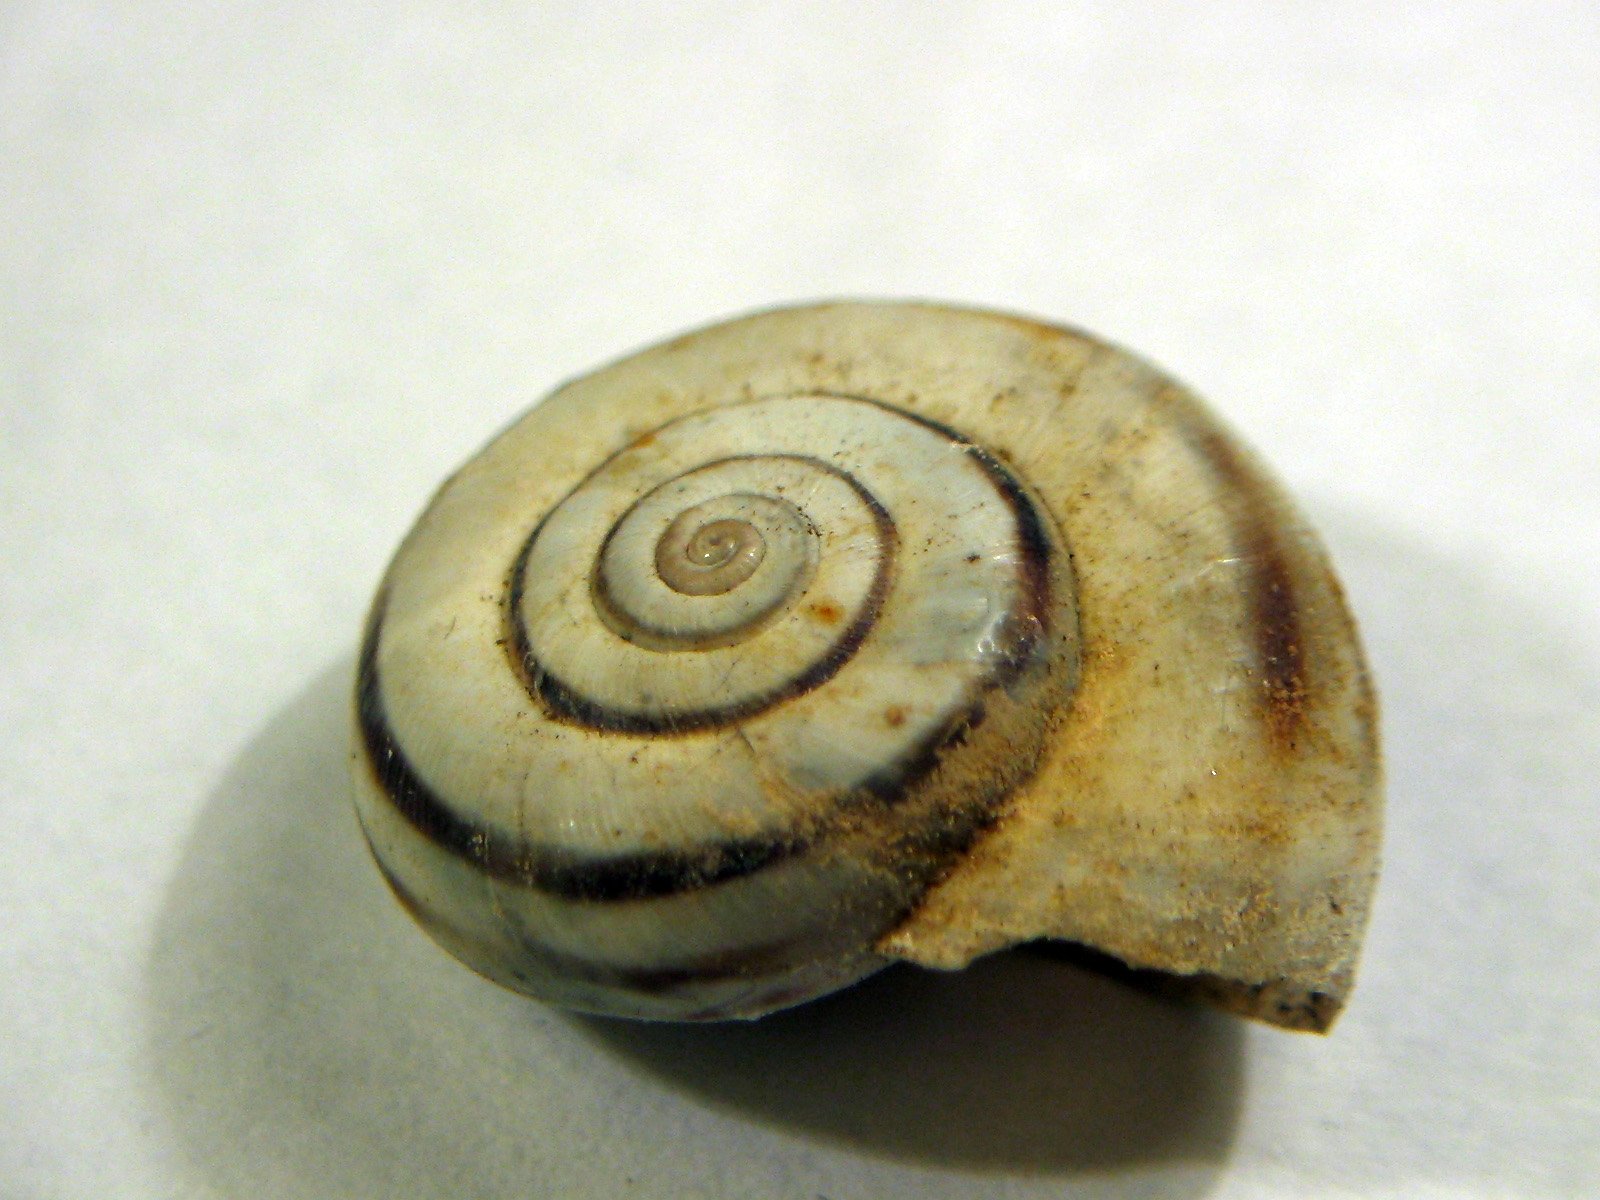 a single shell has a spiral pattern on it